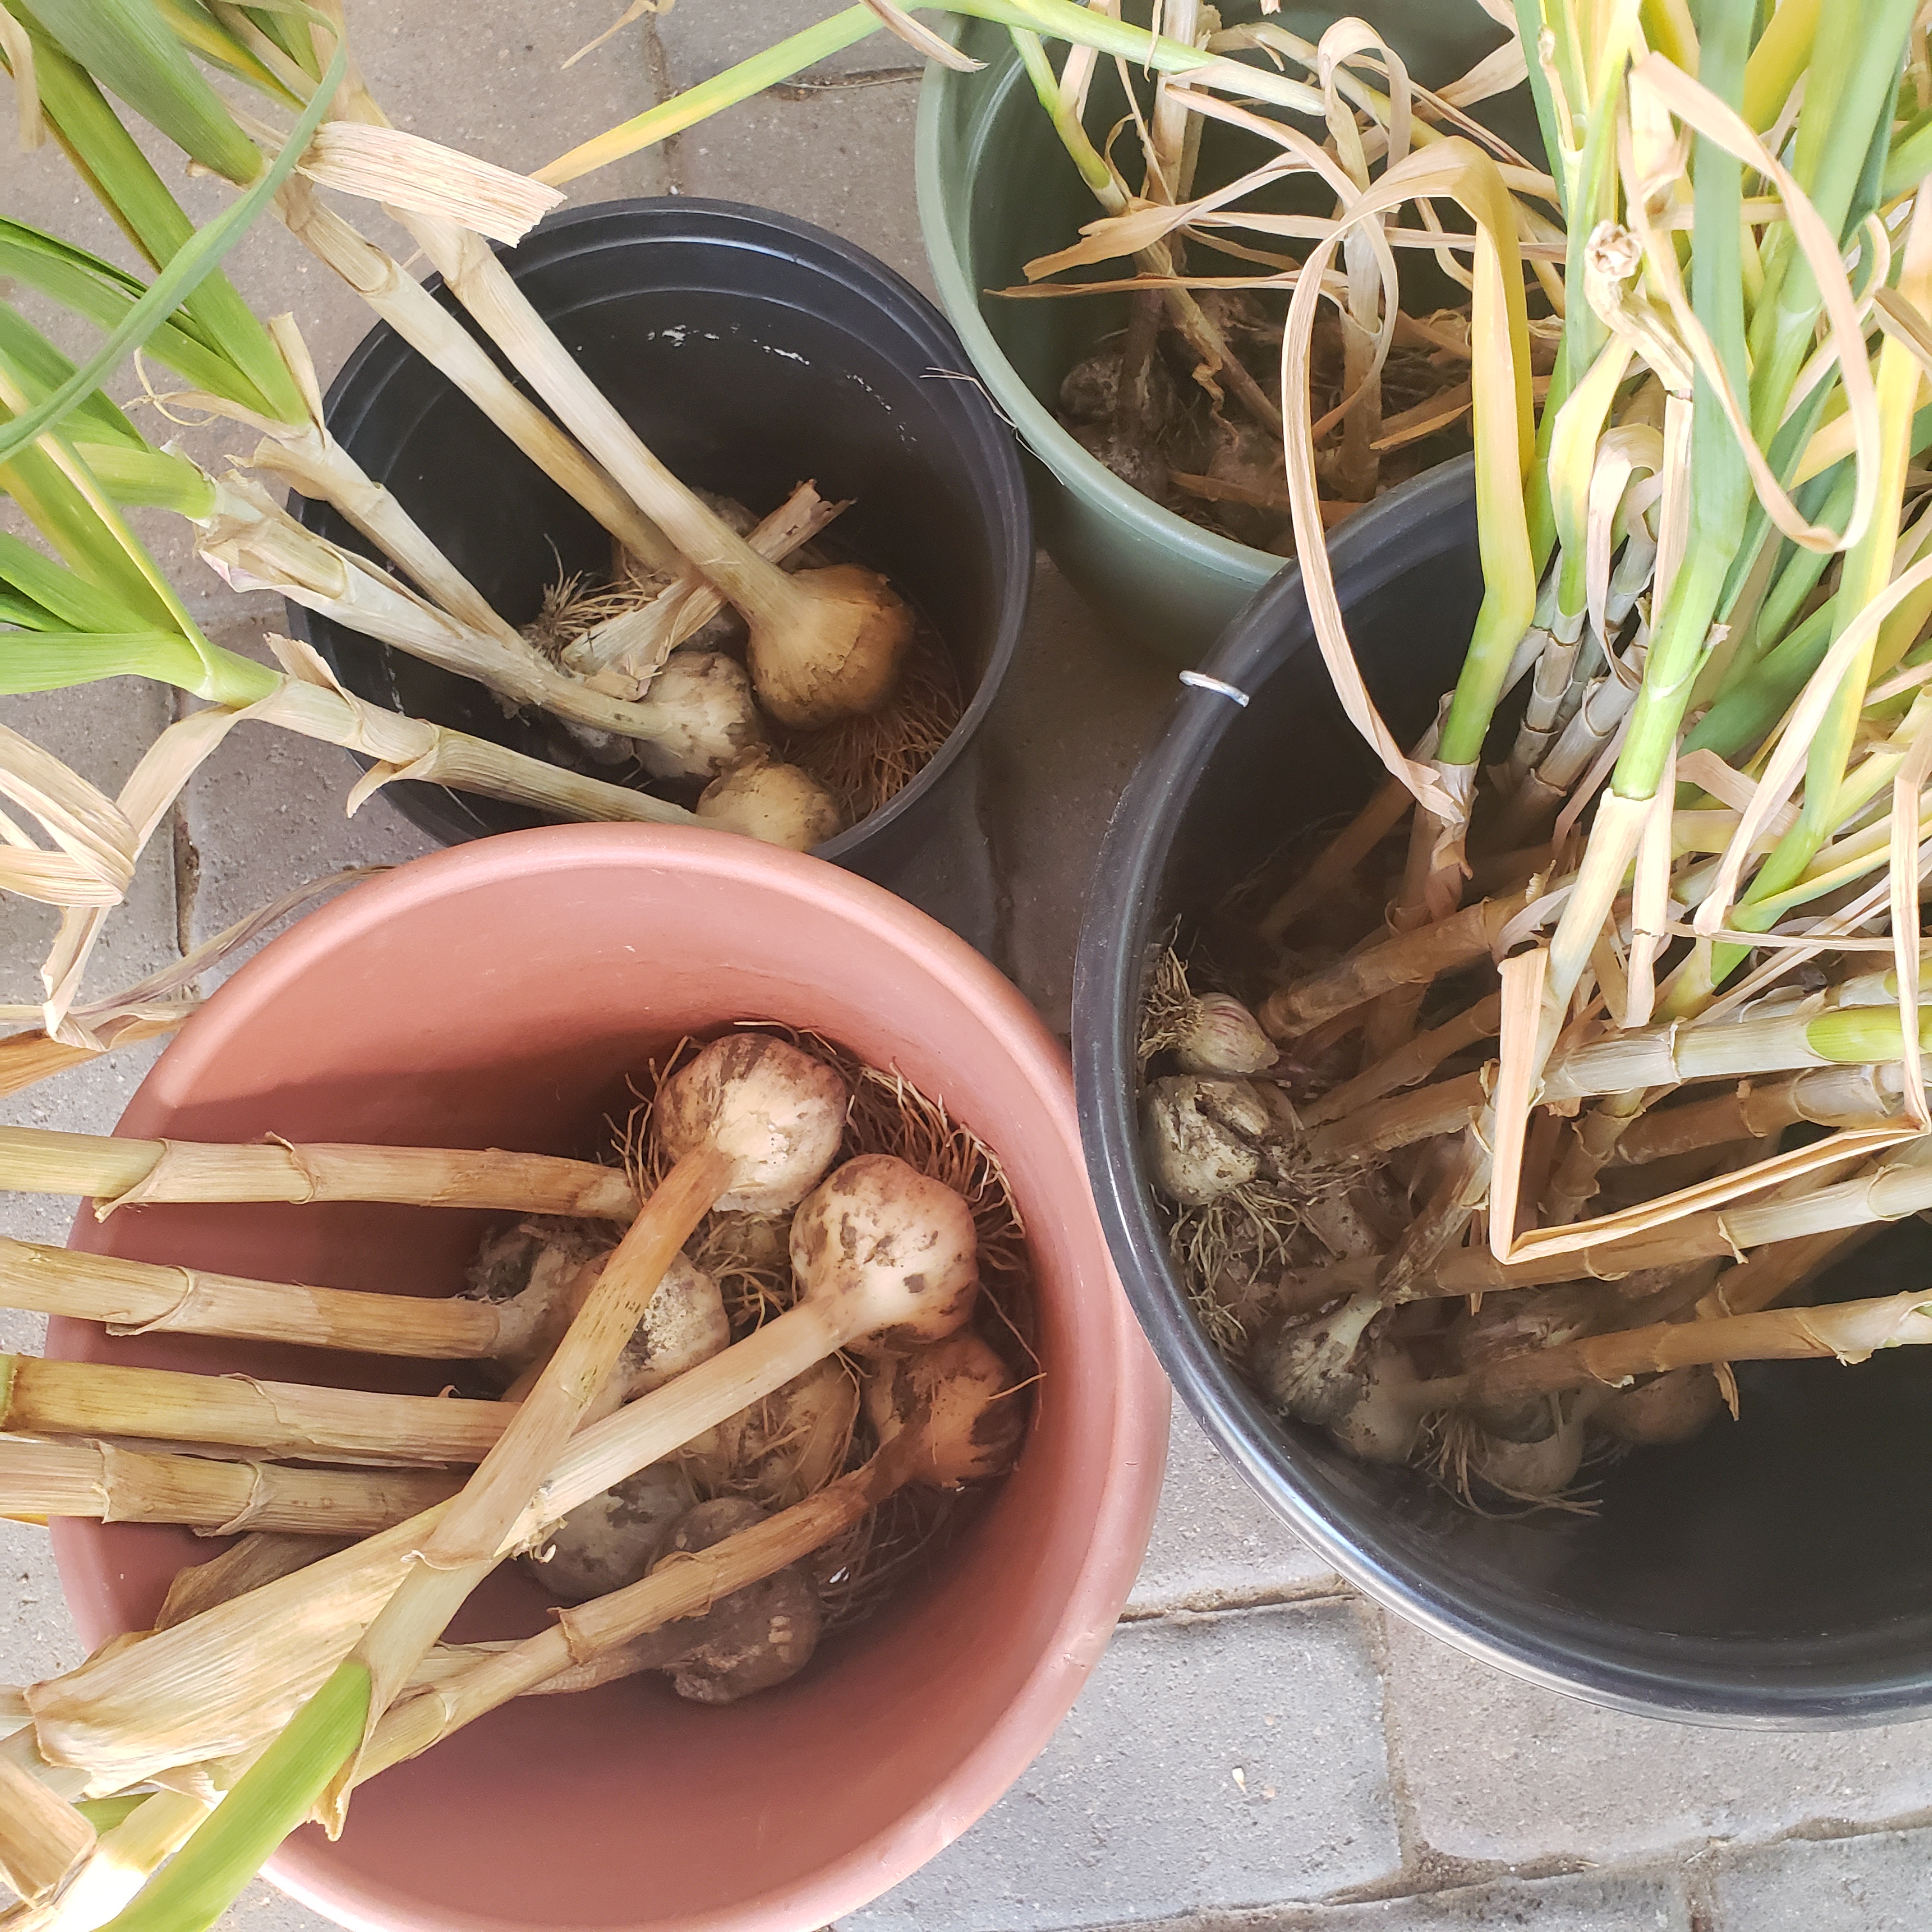 Blundering Gardener: Garlic farm experience shows contrast between